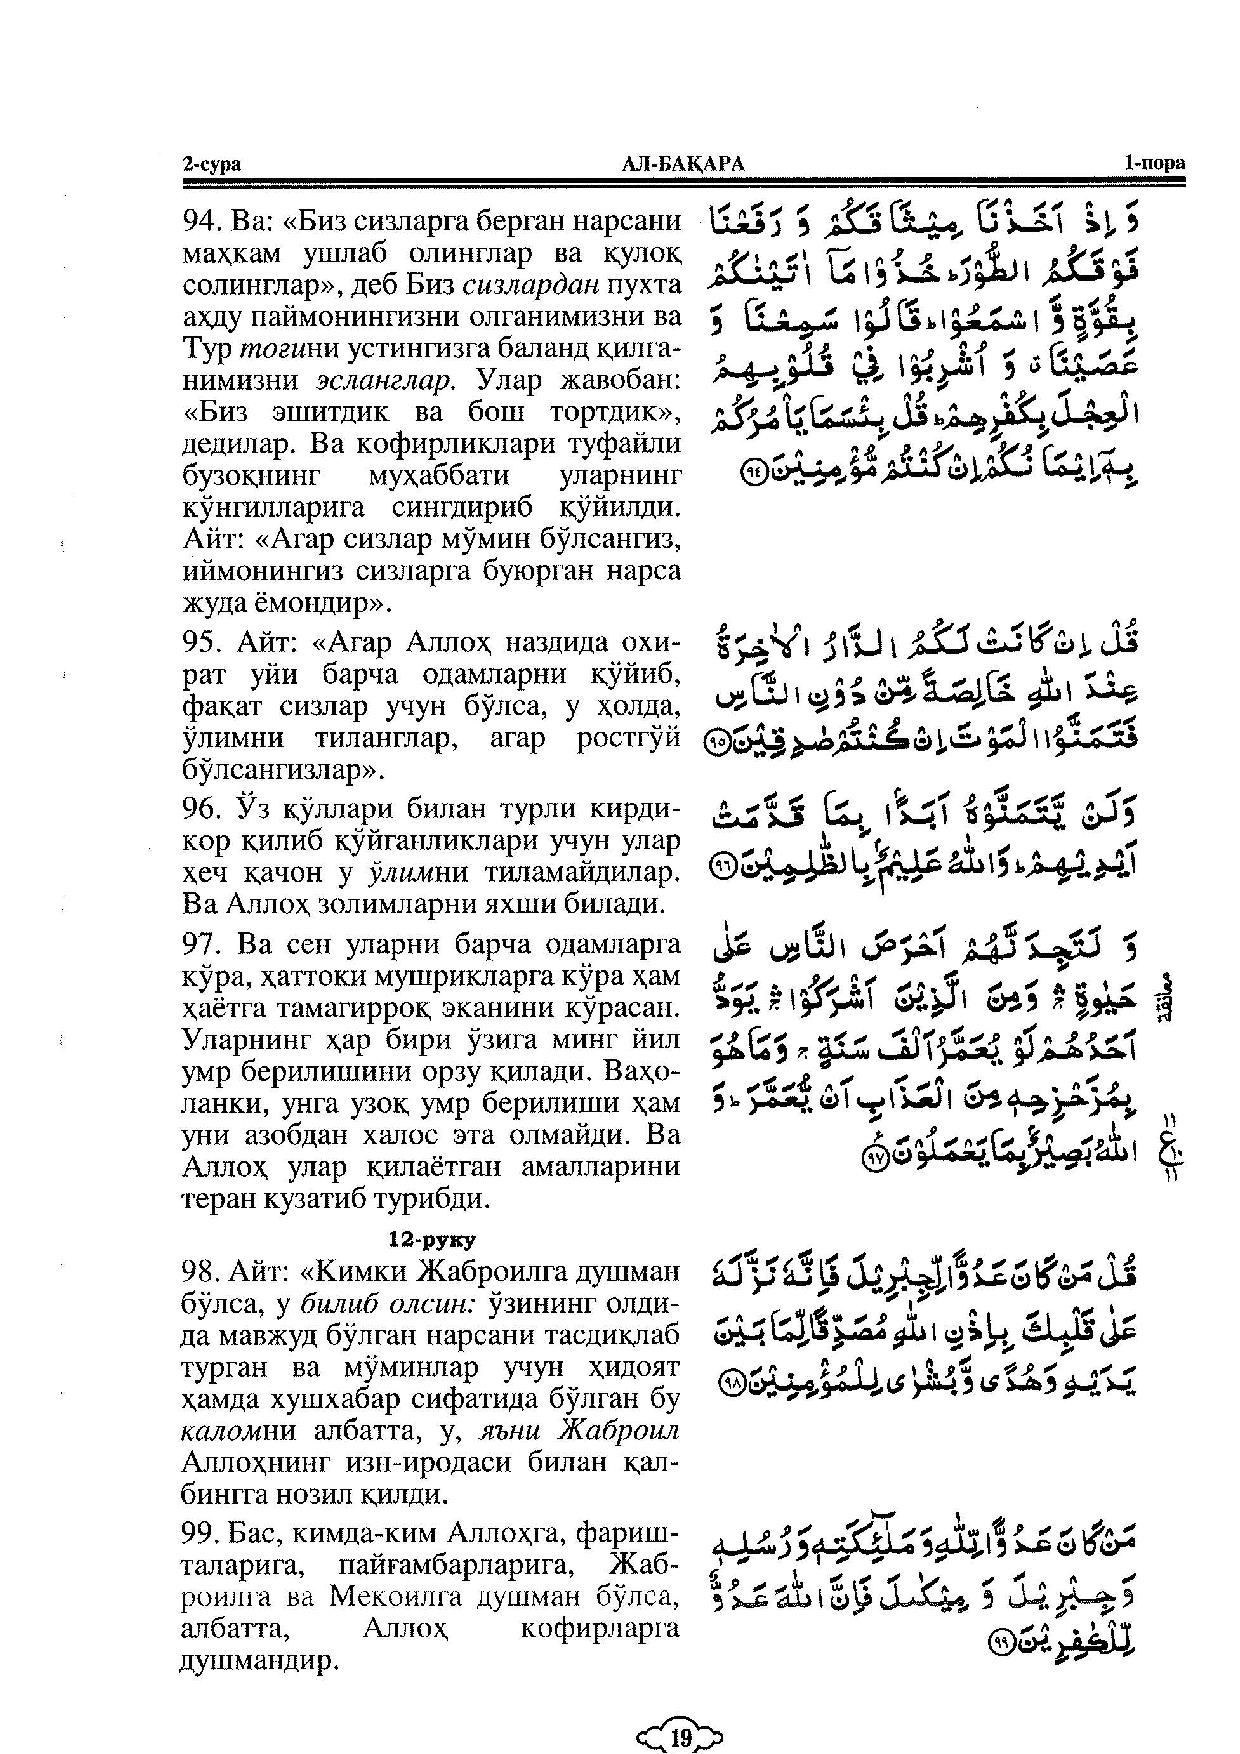 002-al-baqarah-page-017